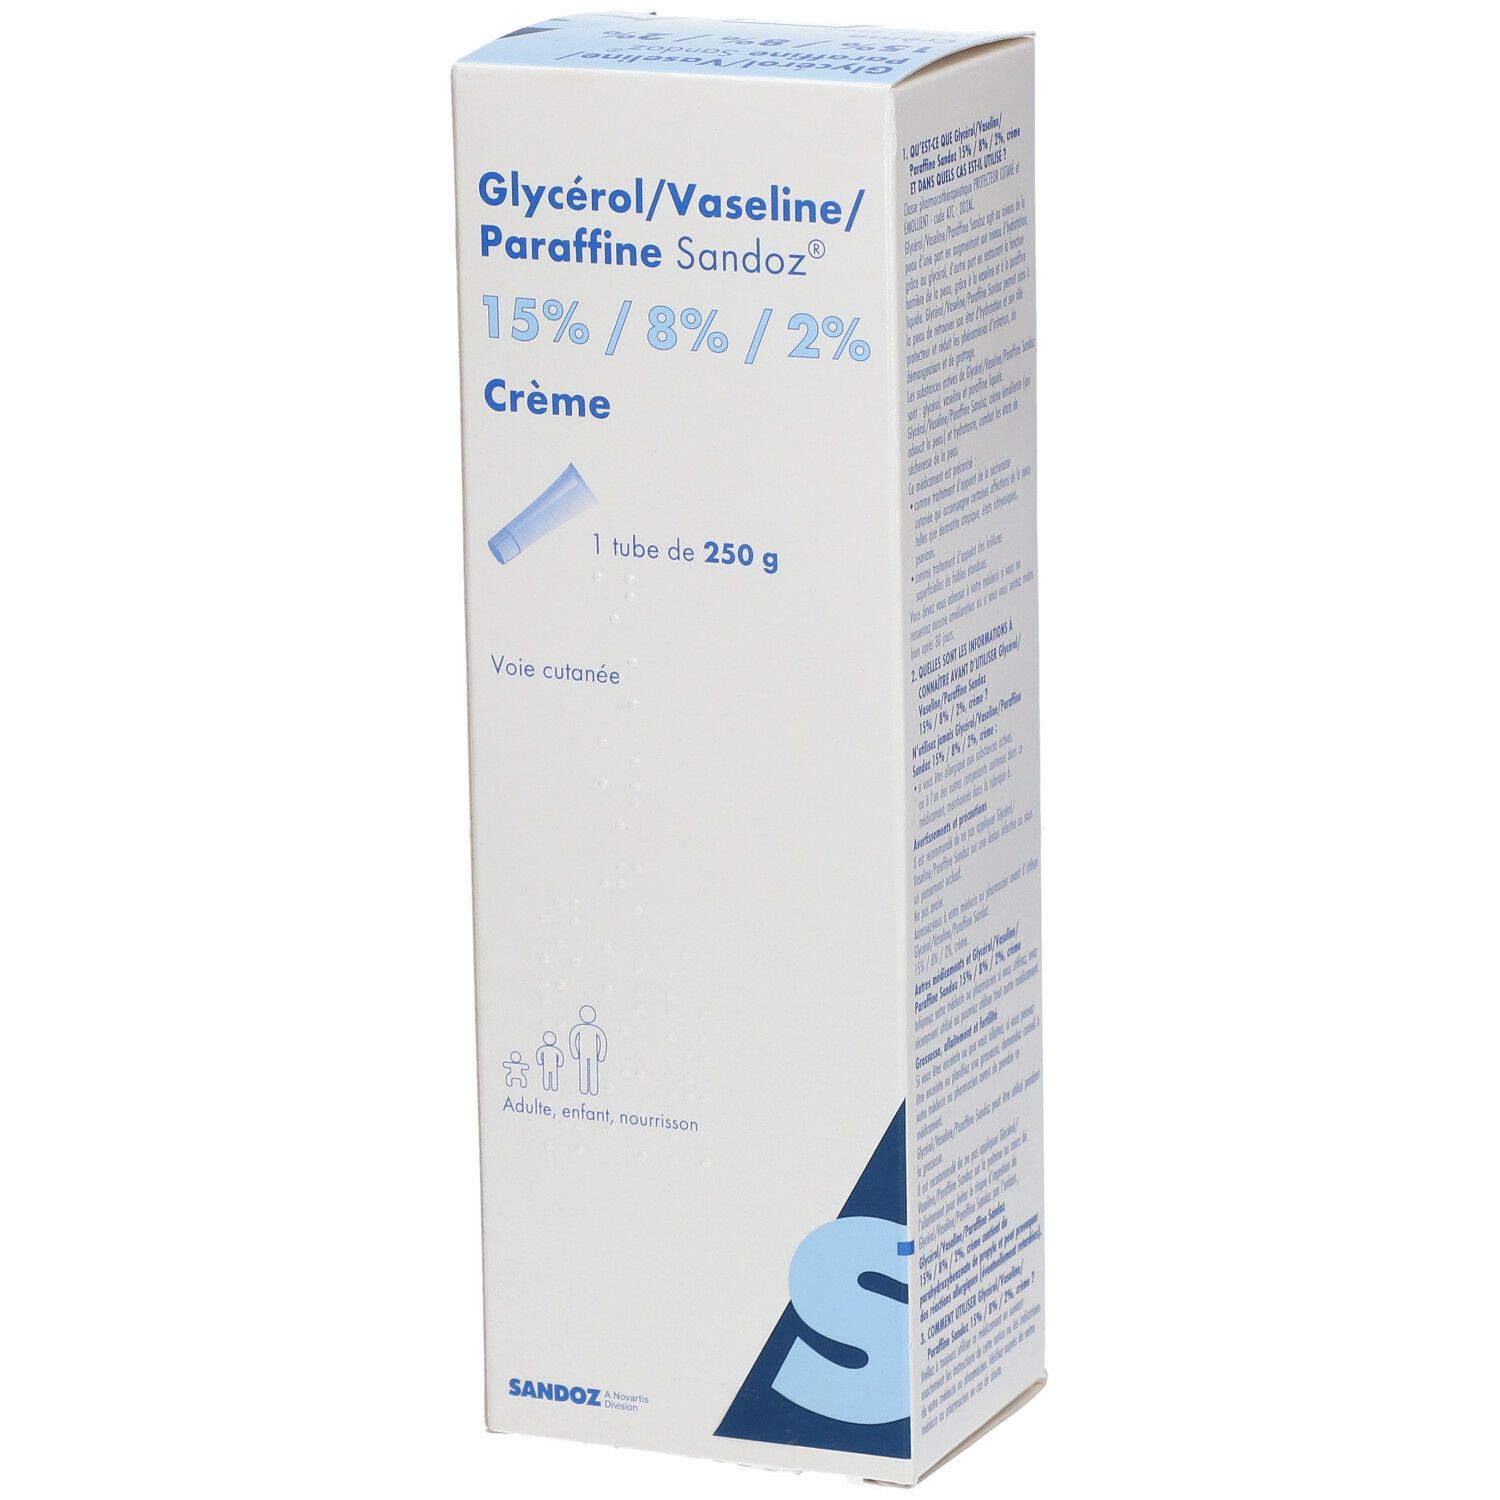 Glycérol/Vaseline/Parafine 15% / 8% / 2% Sandoz® Crème